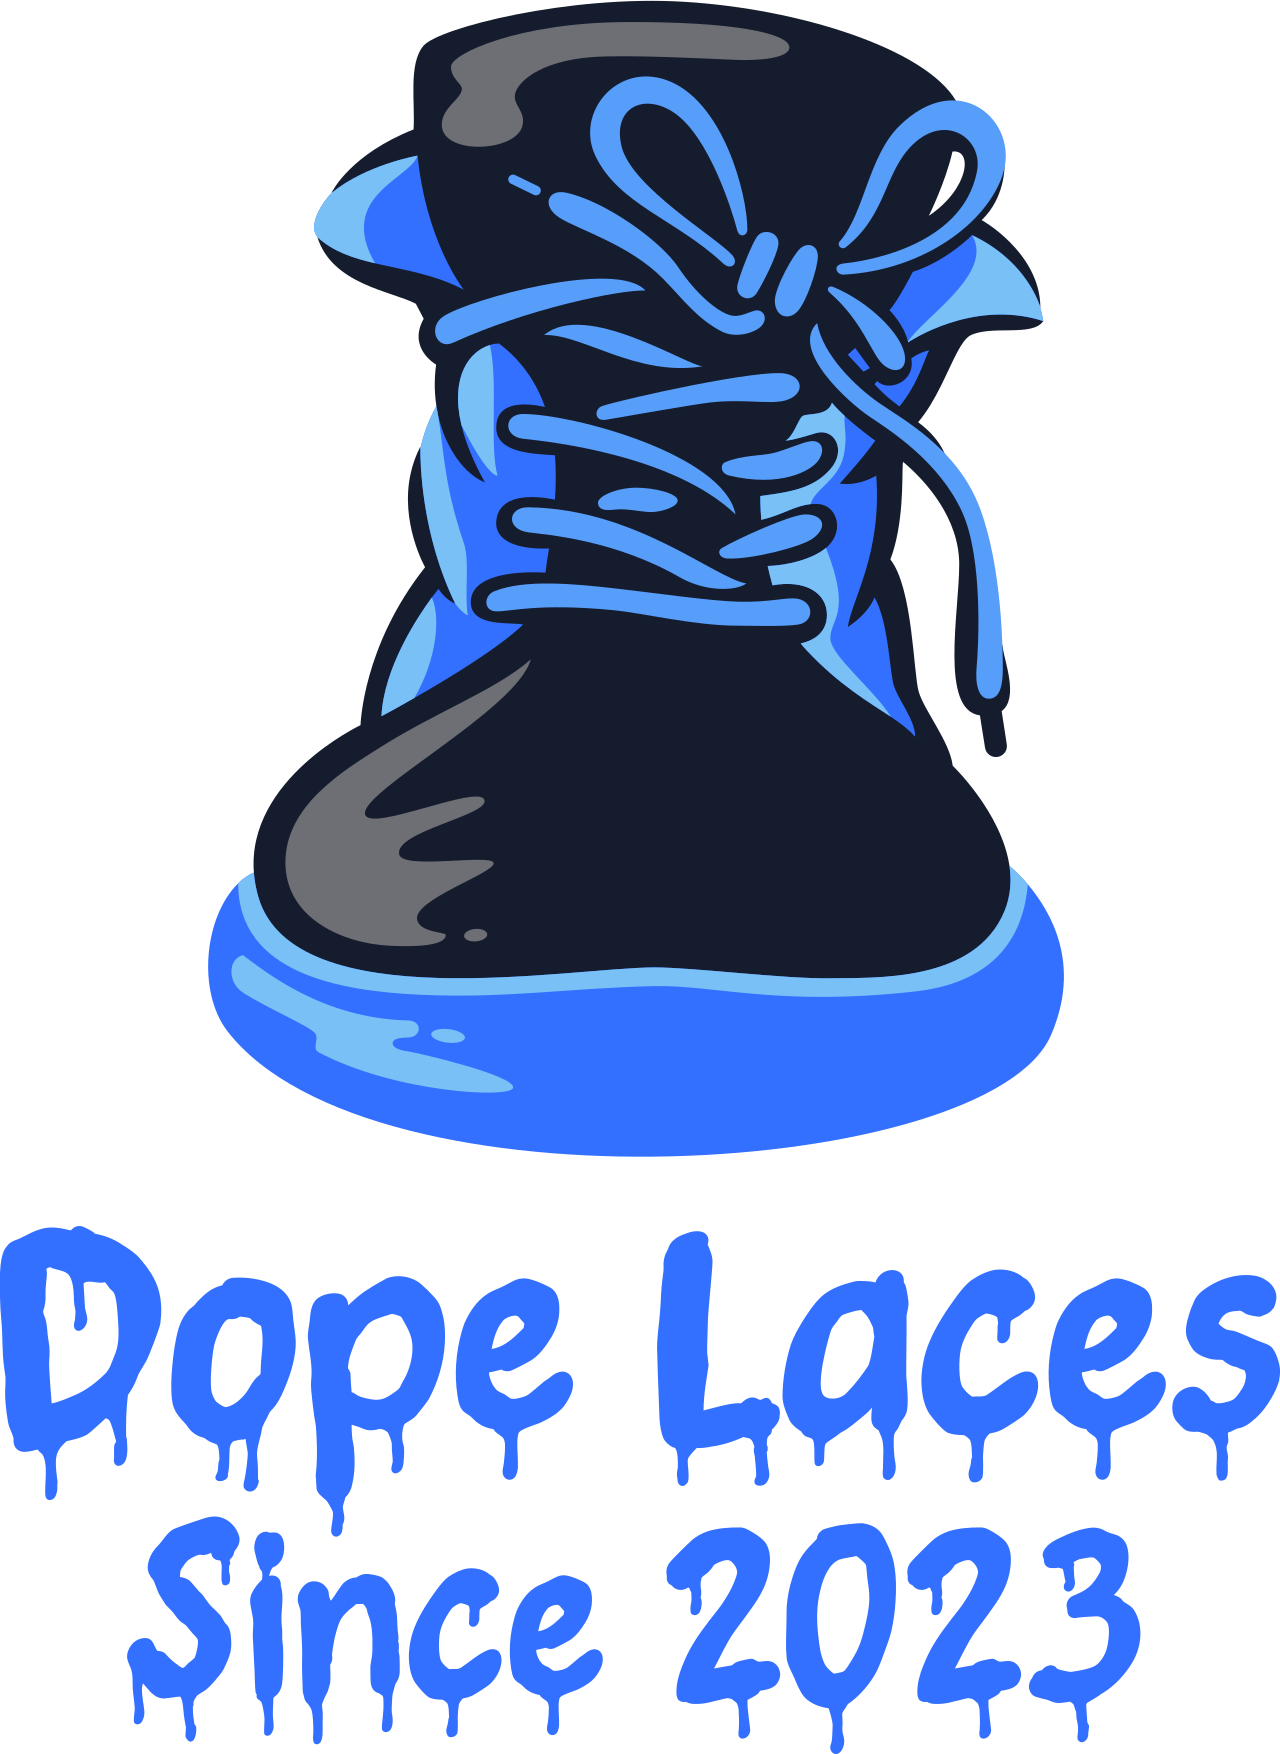 Dope Laces's web page